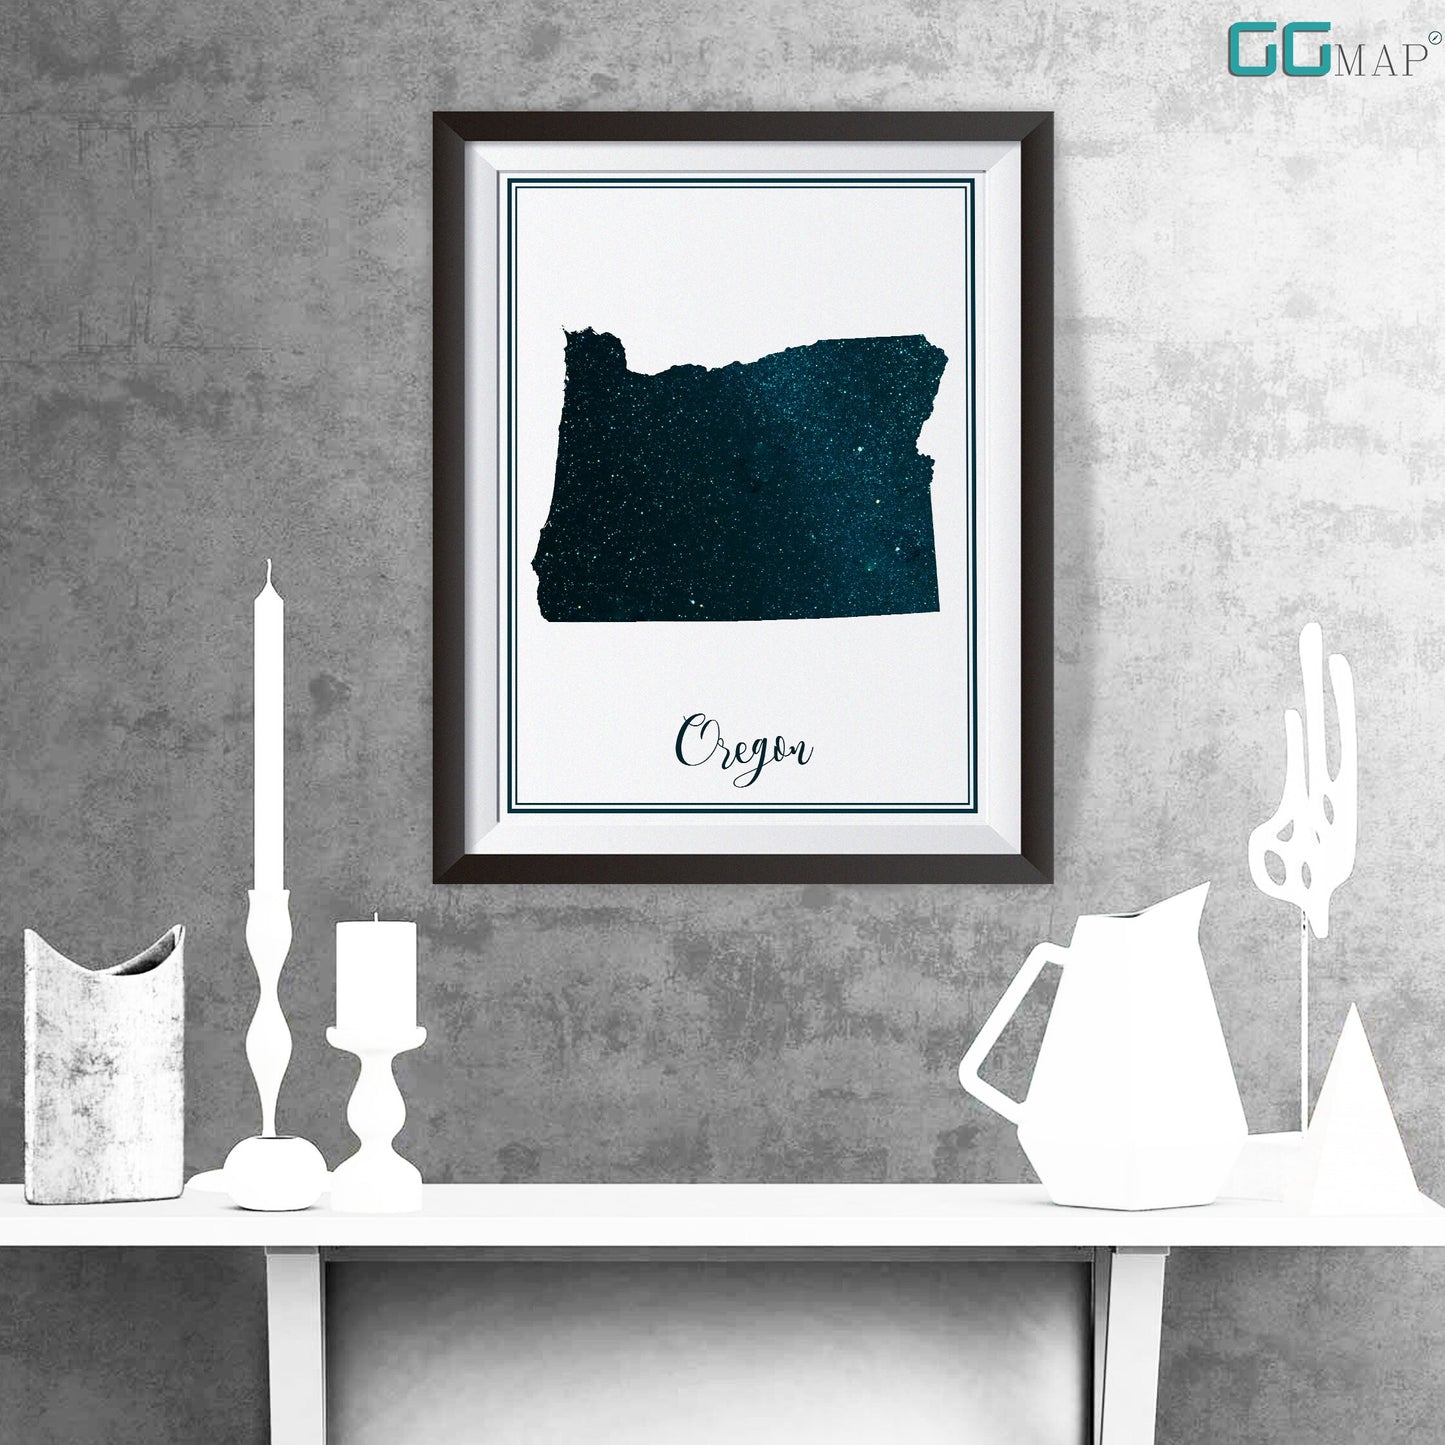 OREGON map - Oregon stars map - Travel poster - Home Decor - Wall decor - Office map - Oregon gift - GeoGIS studio